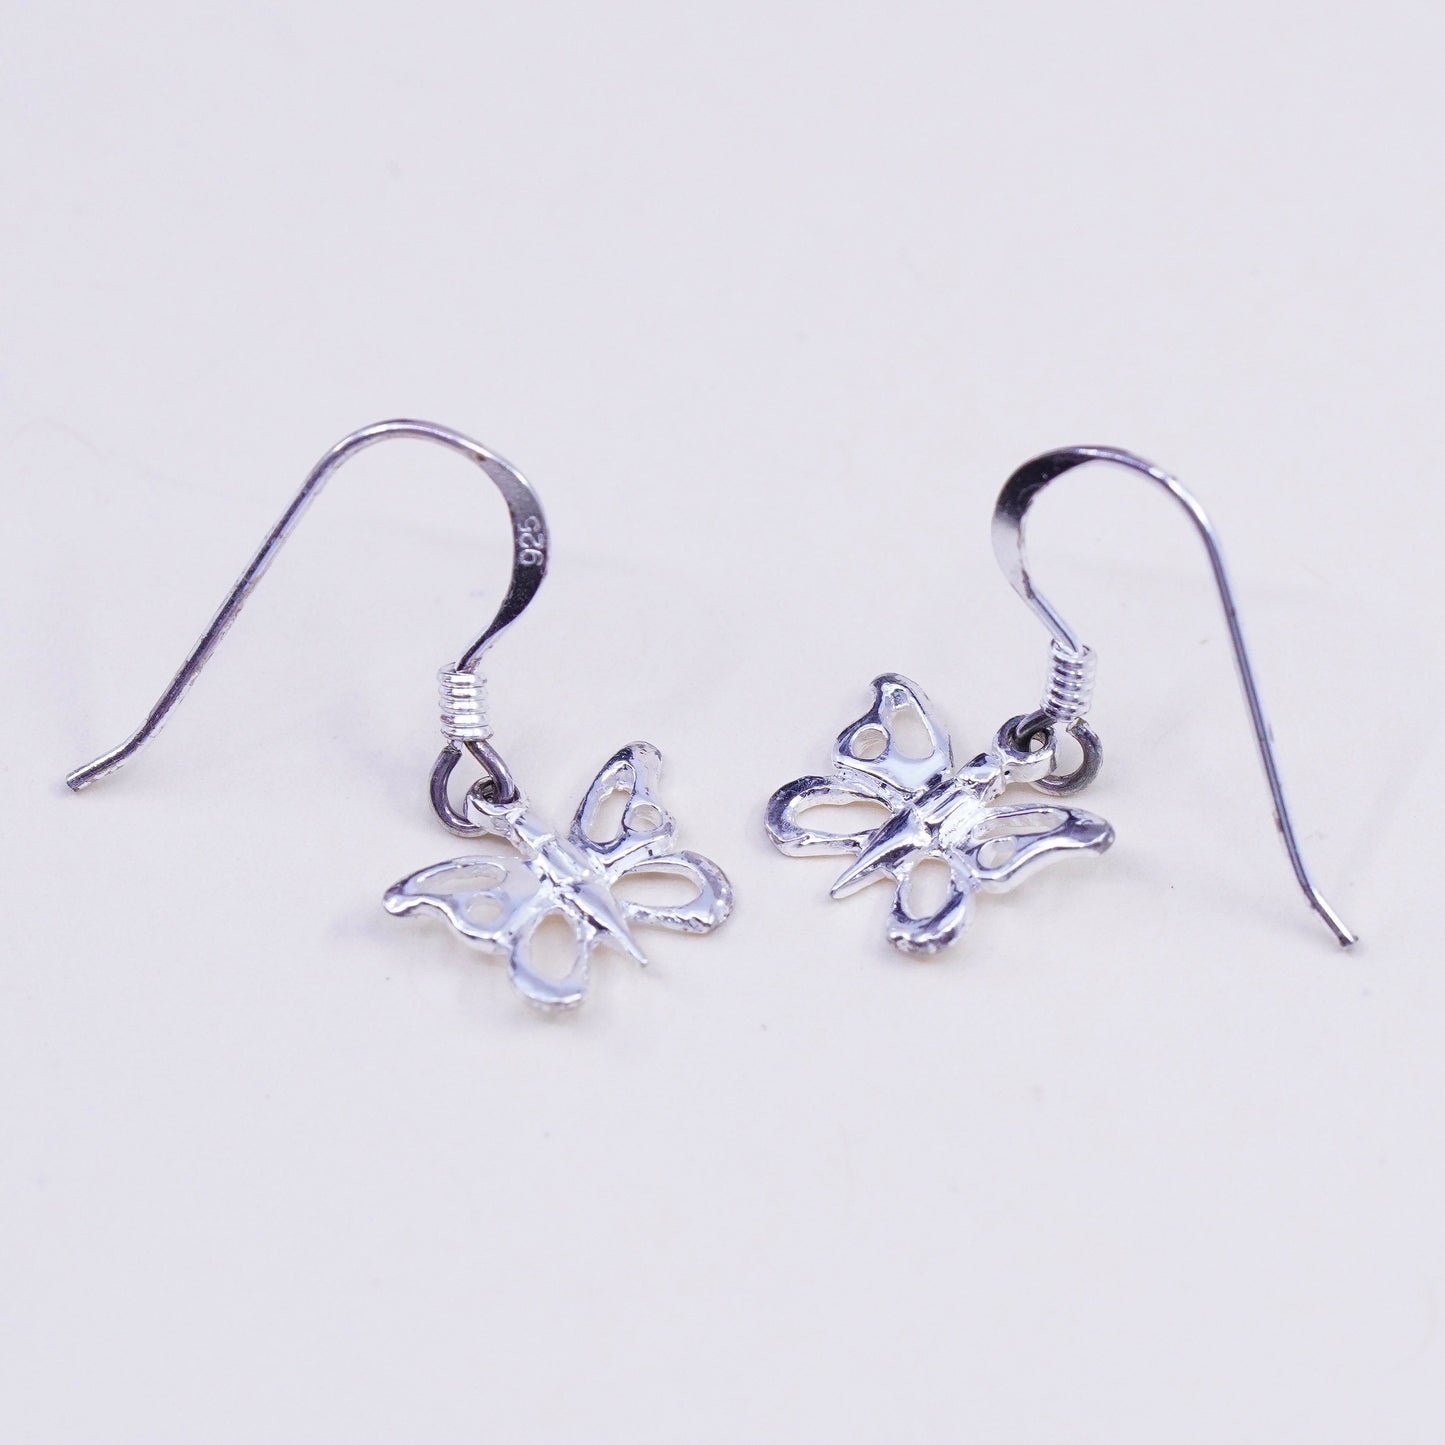 Vintage sterling silver handmade earrings, 925 butterfly dangles